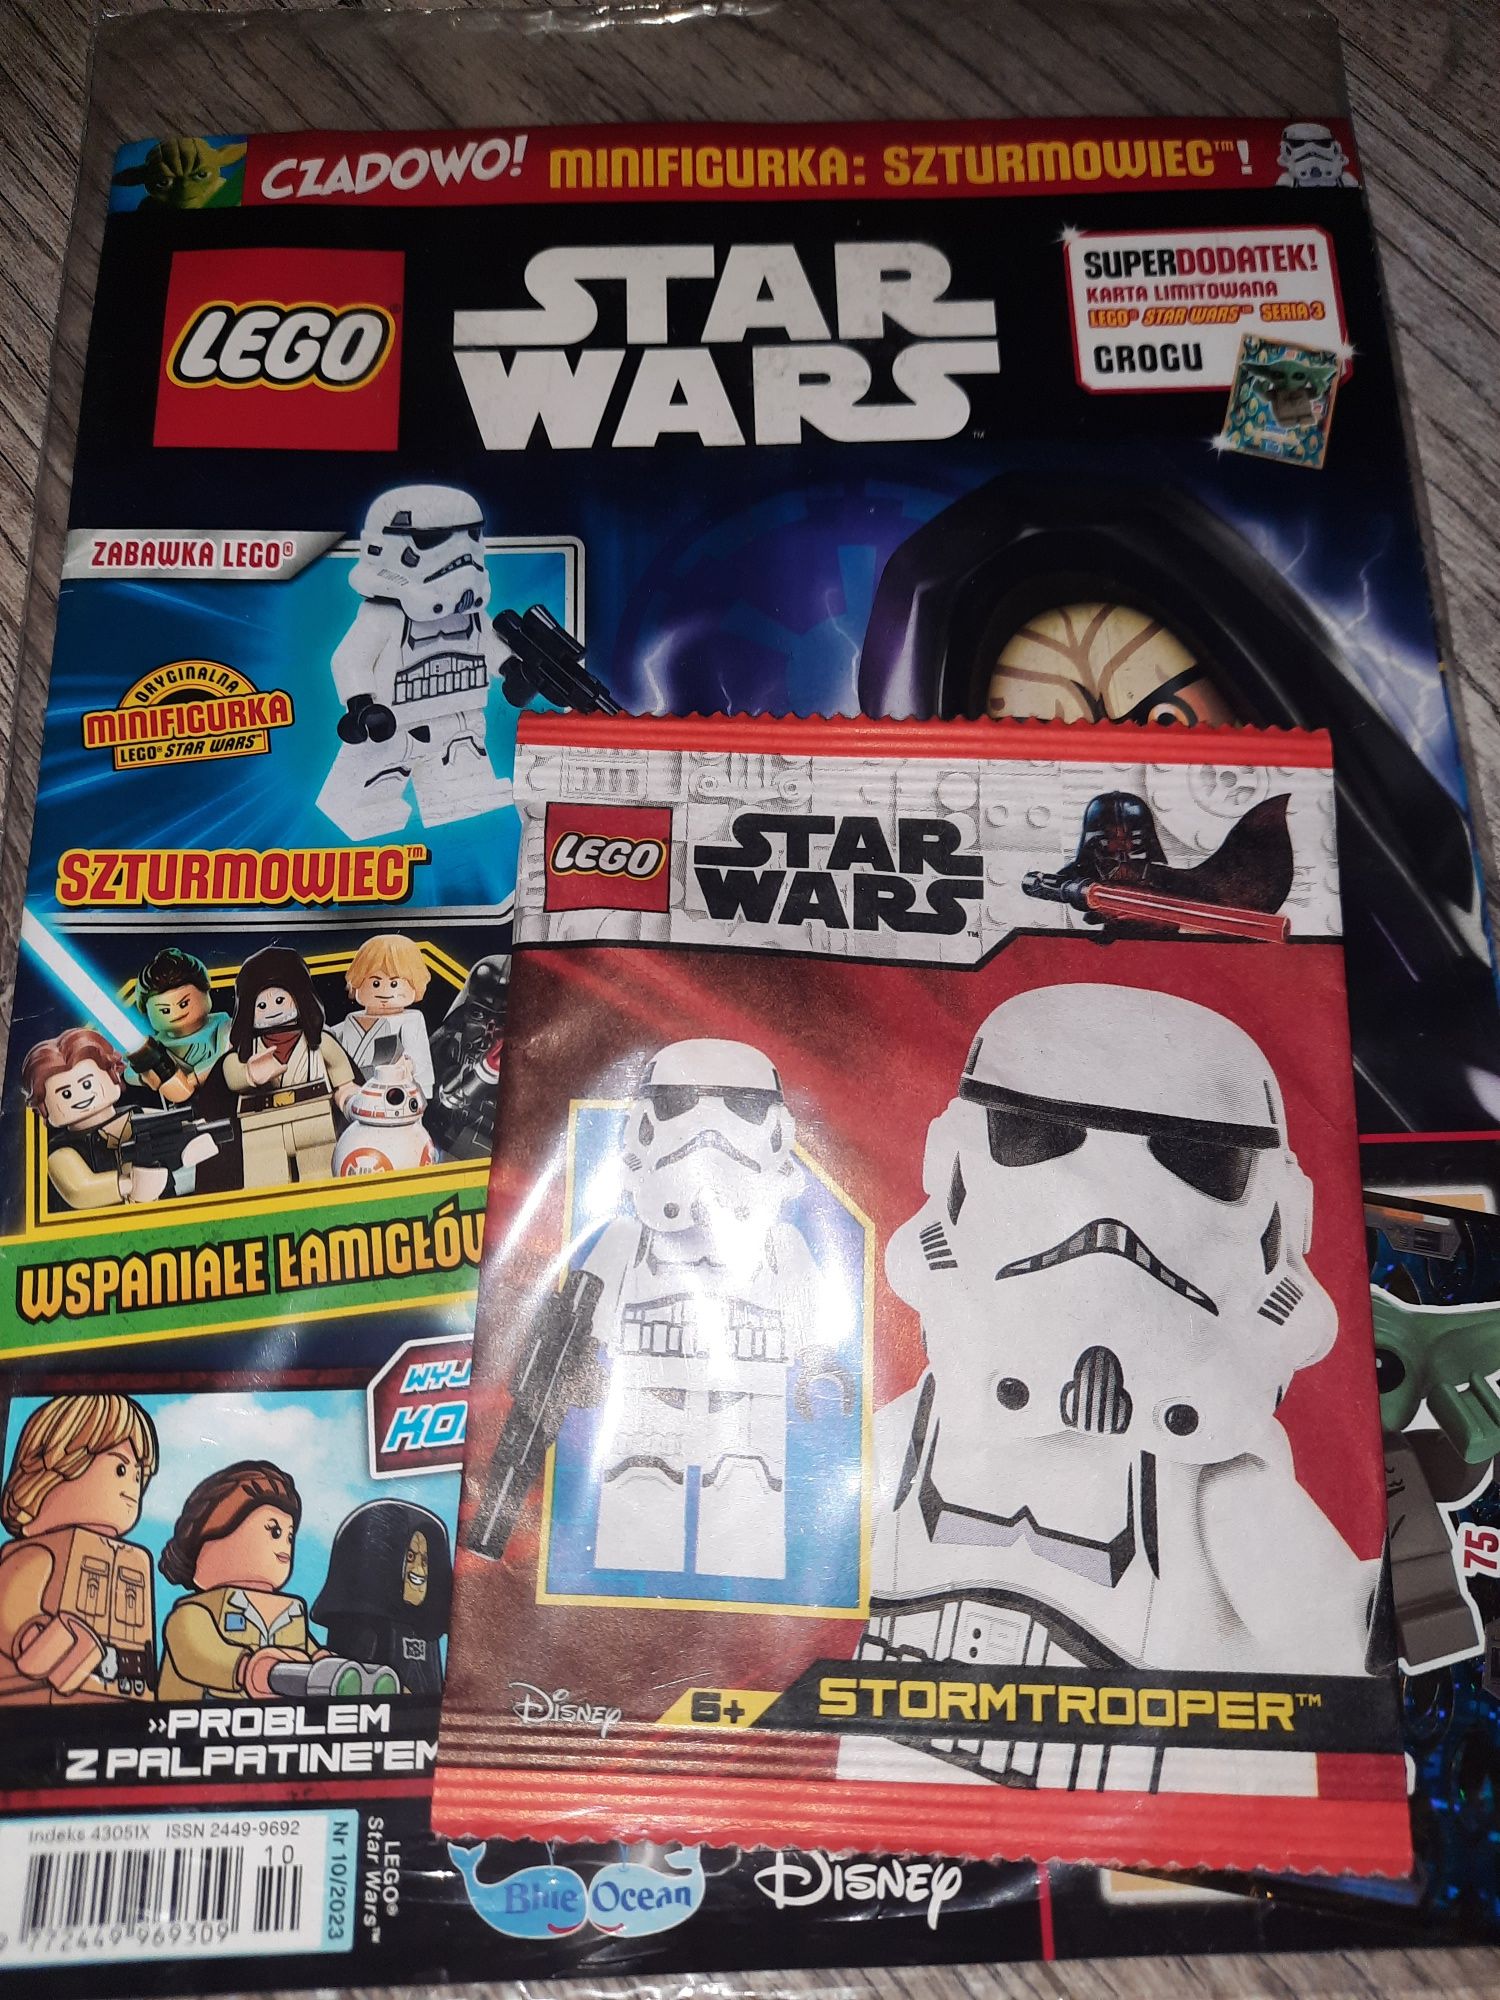 Lego Star Wars gazetka z figurką Stormtrooper